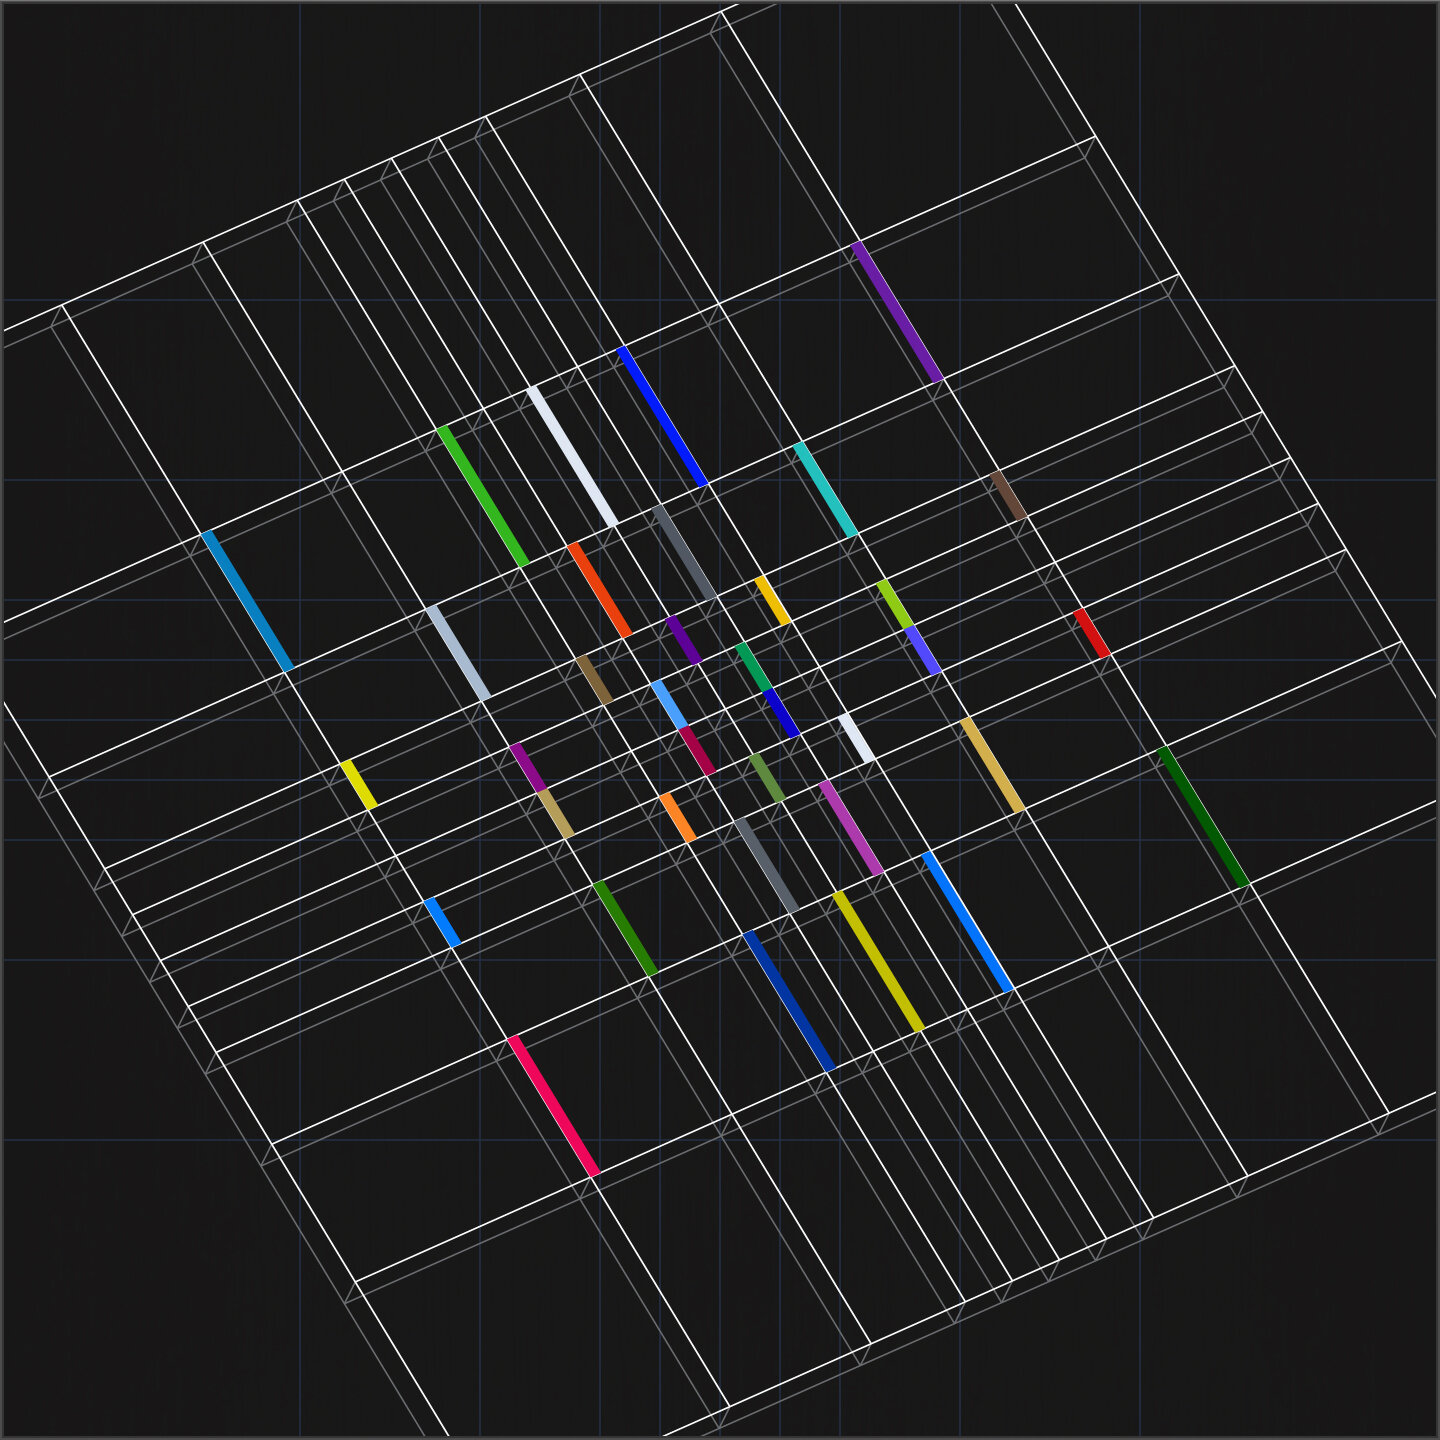 Fibonacci-sequence-space [20200503-b] [Color-elements], acrylic on canvas